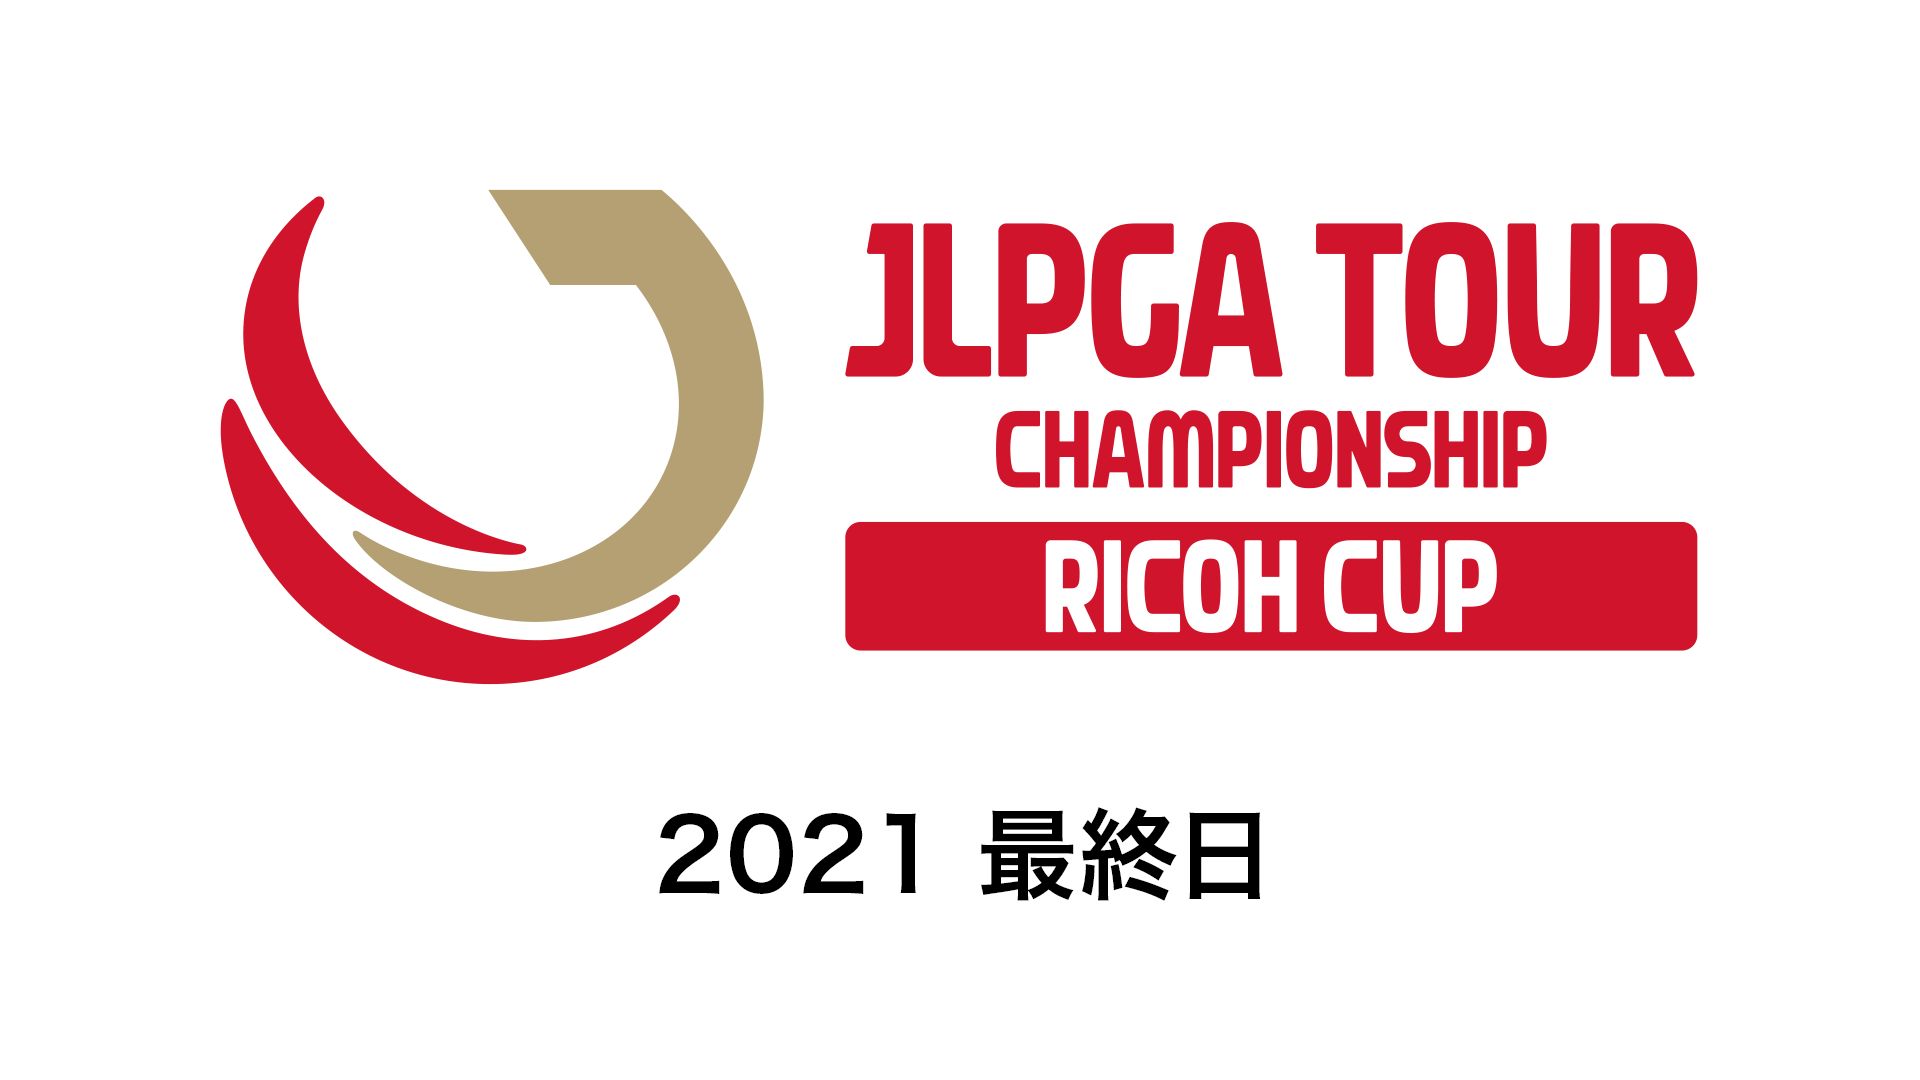 JLPGAツアーチャンピオンシップリコーカップ2021 最終日